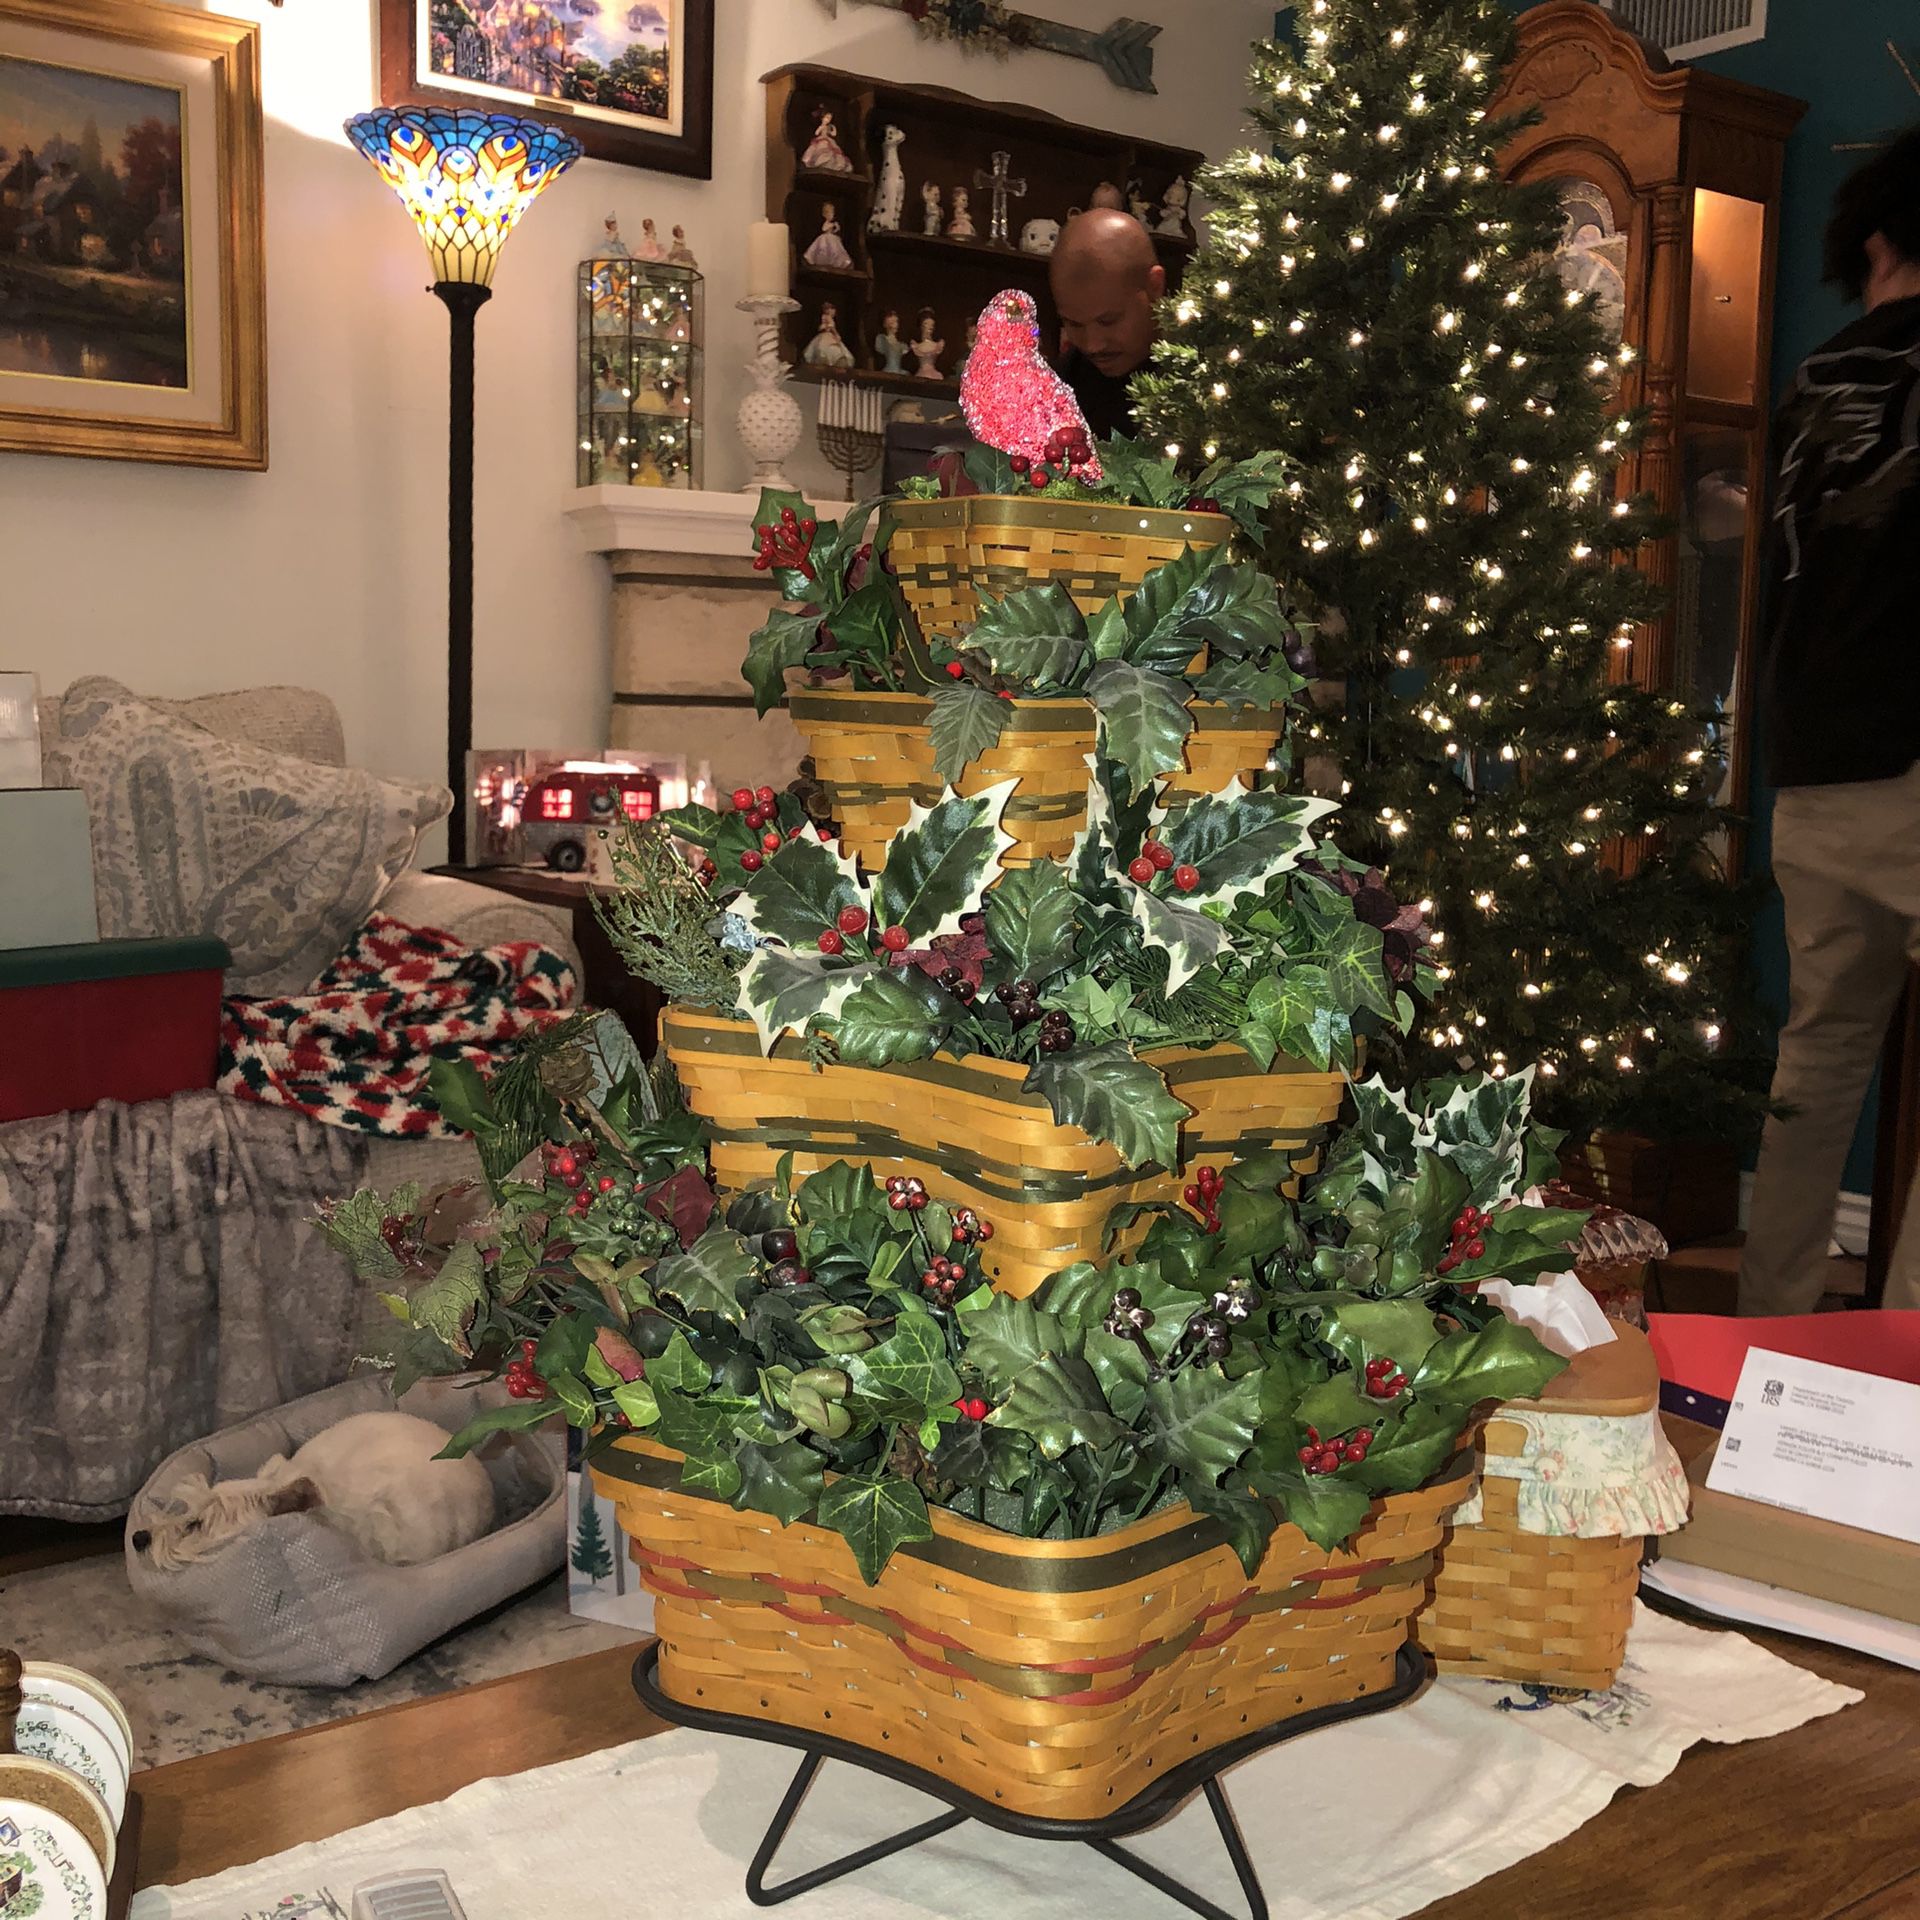 Longaberger Christmas Baskets